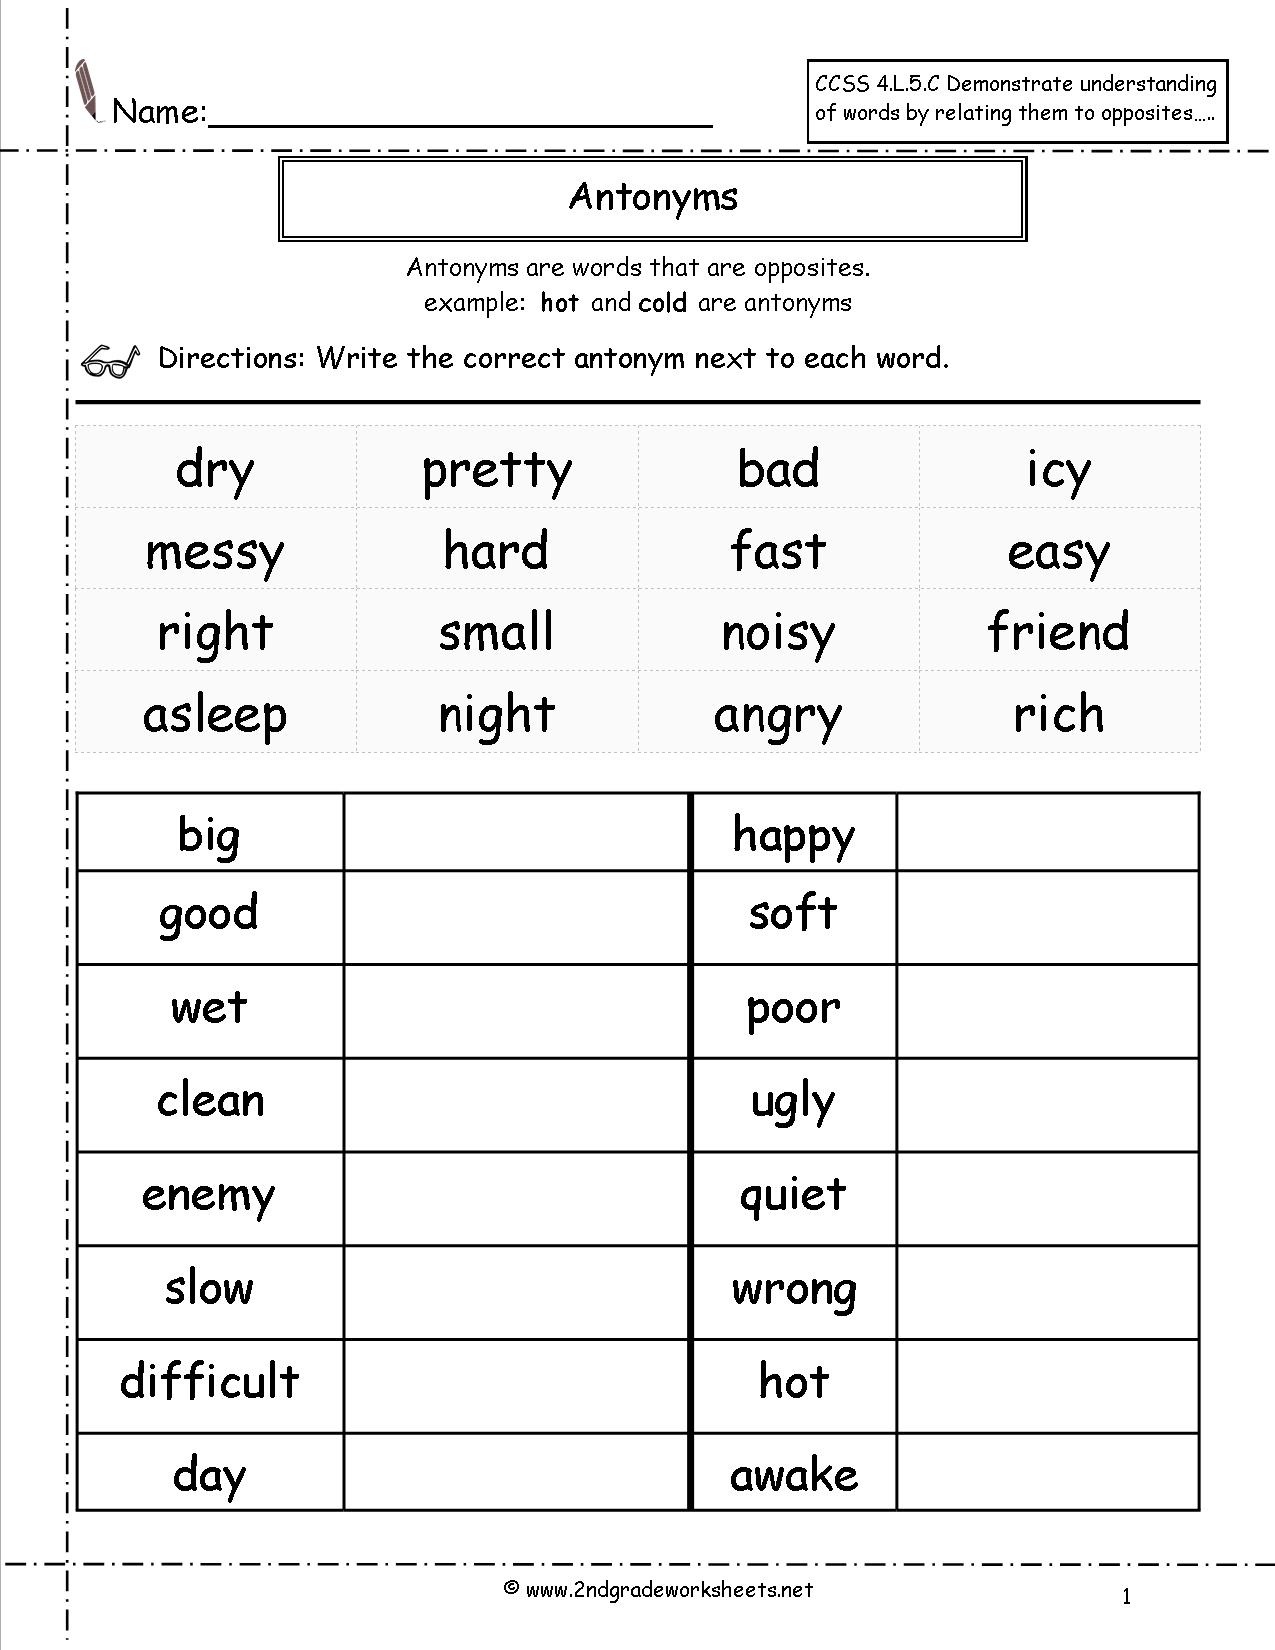 English Grammar Printable Worksheets